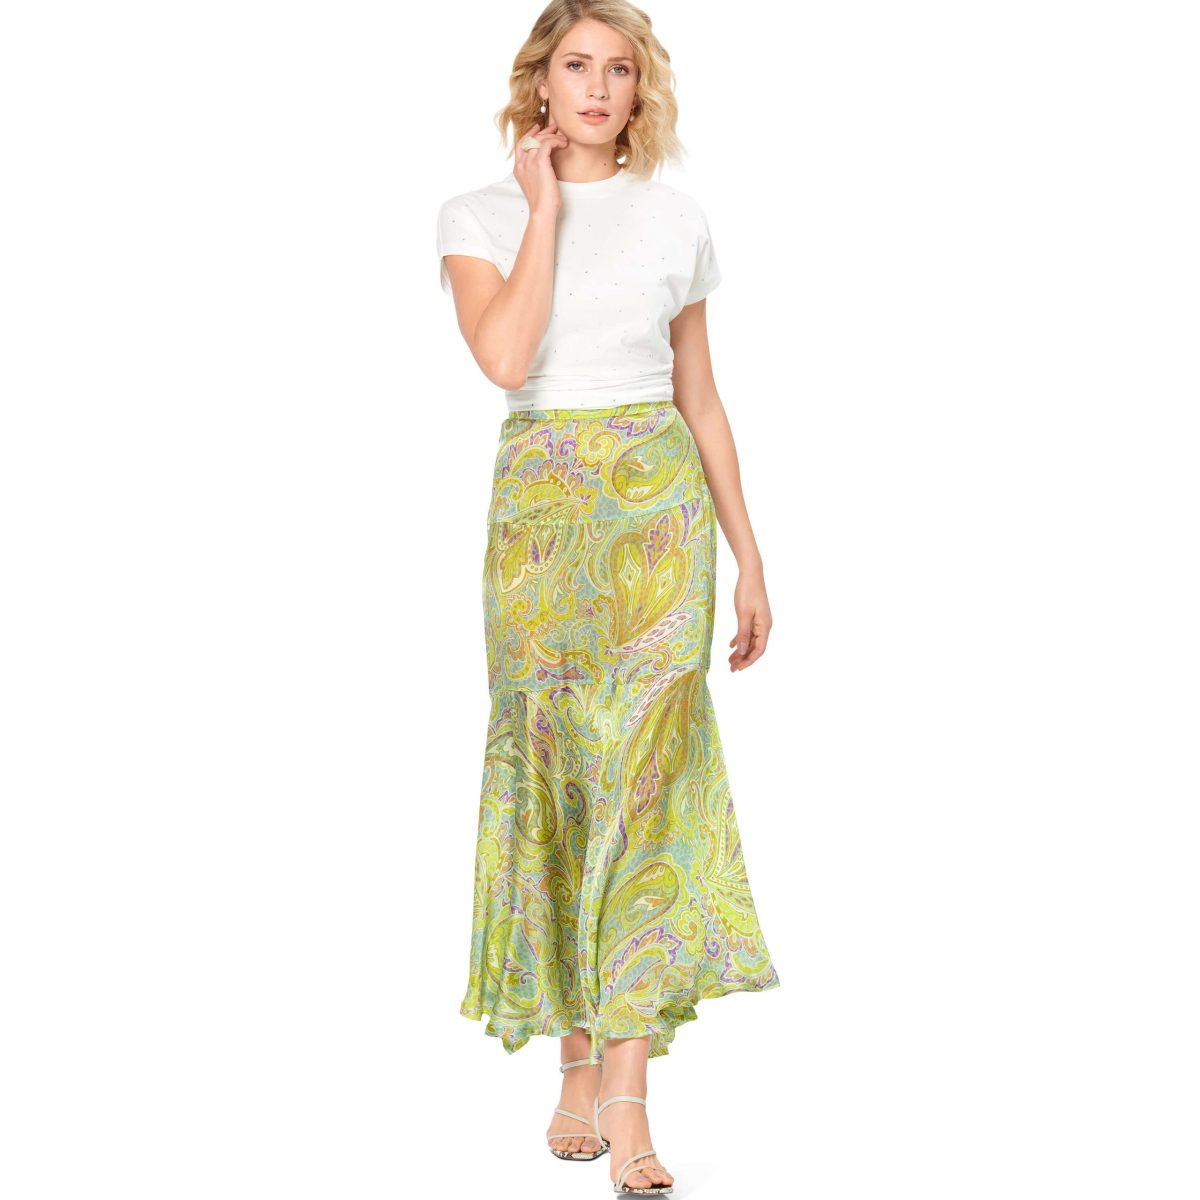 Burda Style Pattern 6142 Misses' Skirt